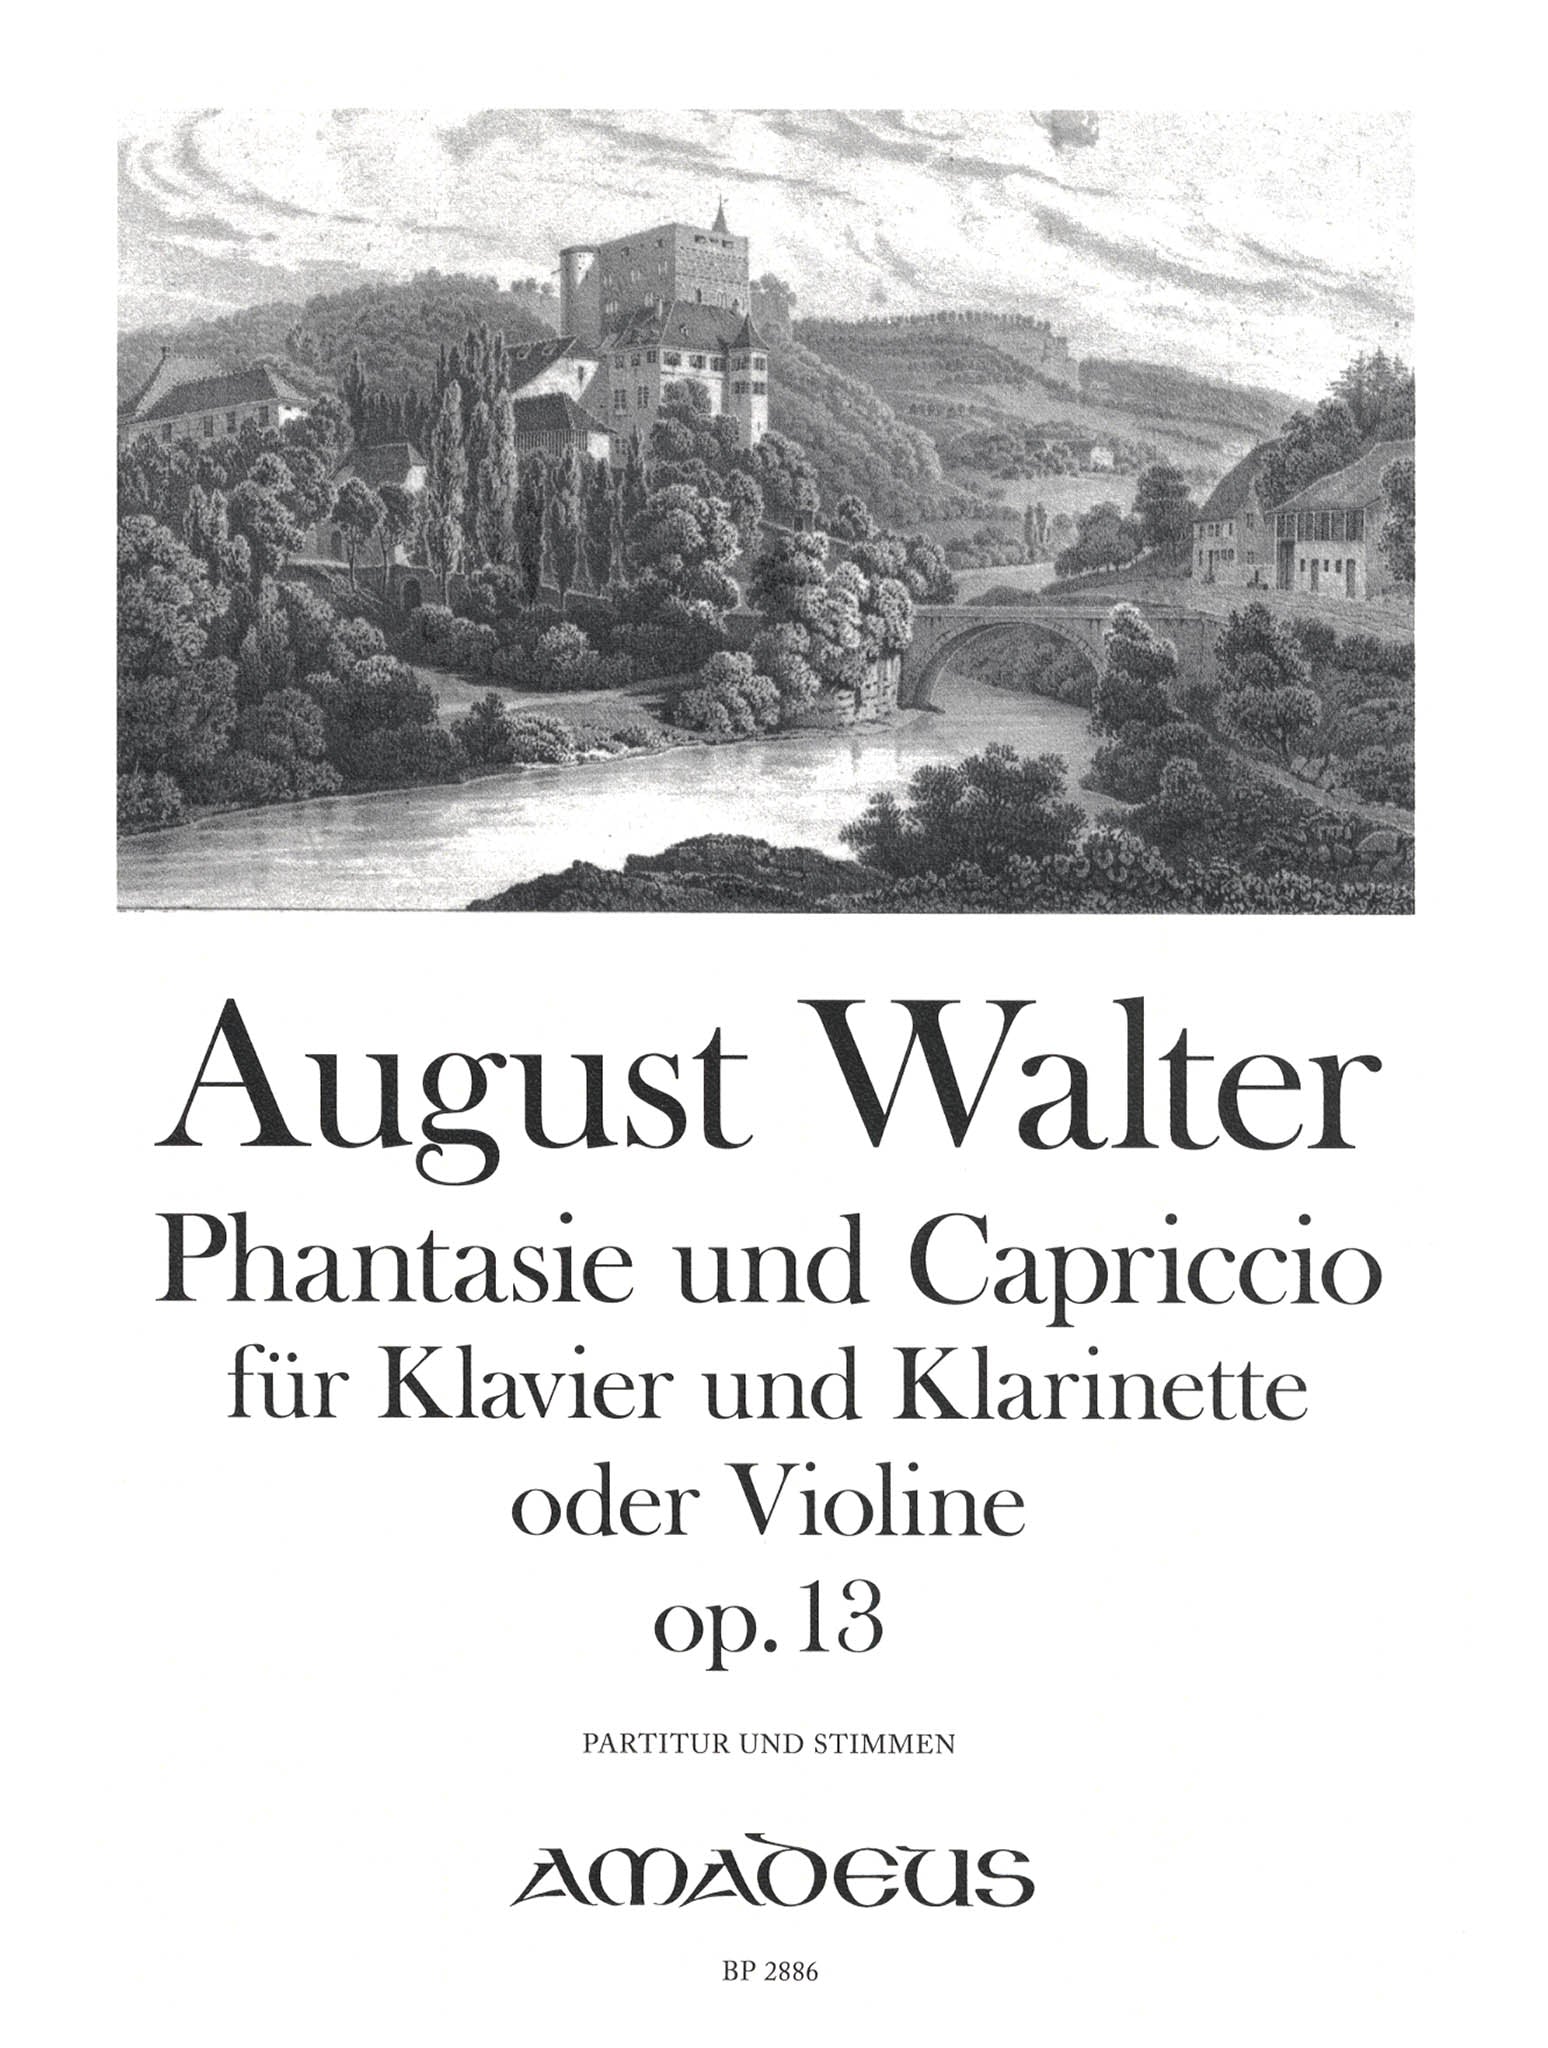 August Walter Fantasy & Capriccio, Op. 13 clarinet & piano cover